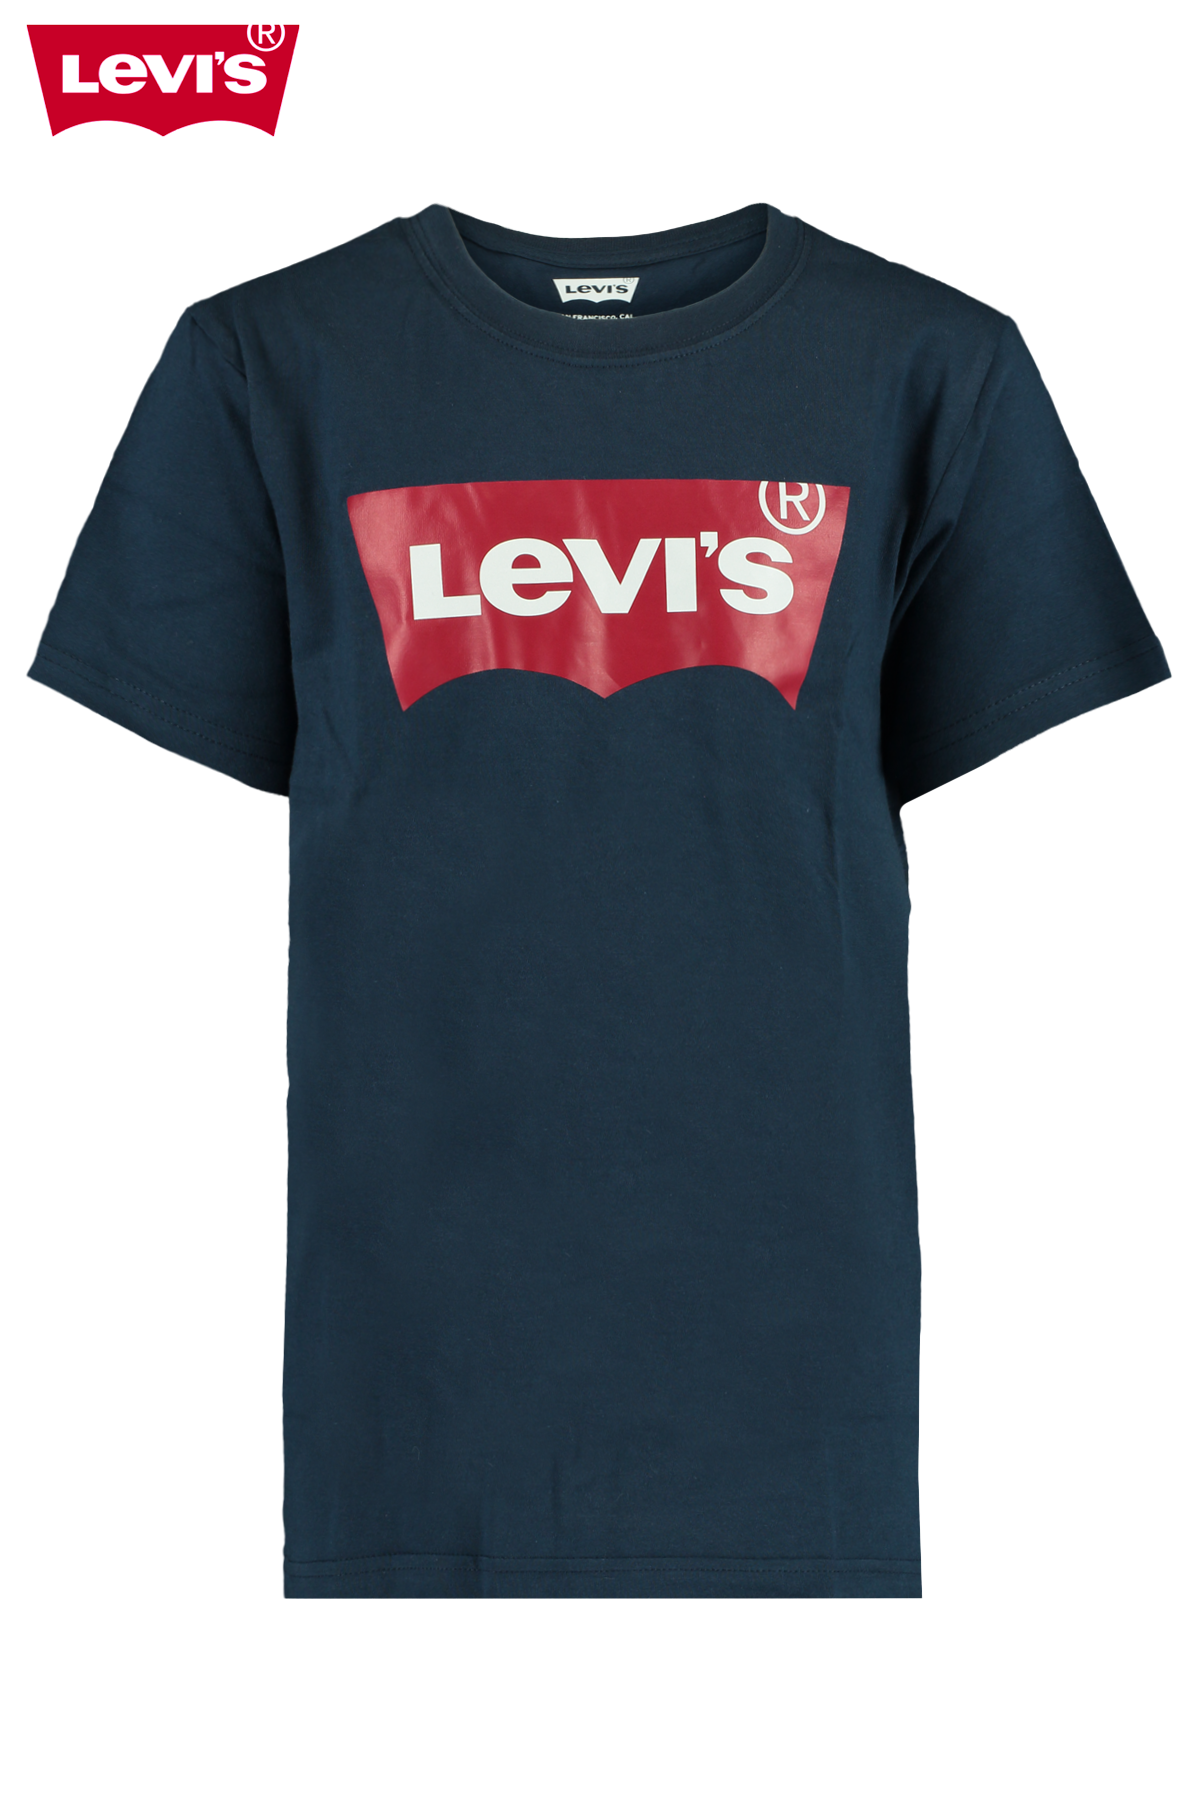 Aanbod kogel Hoopvol Jongens Levi's t-shirt Batwing Tee Navy | America Today